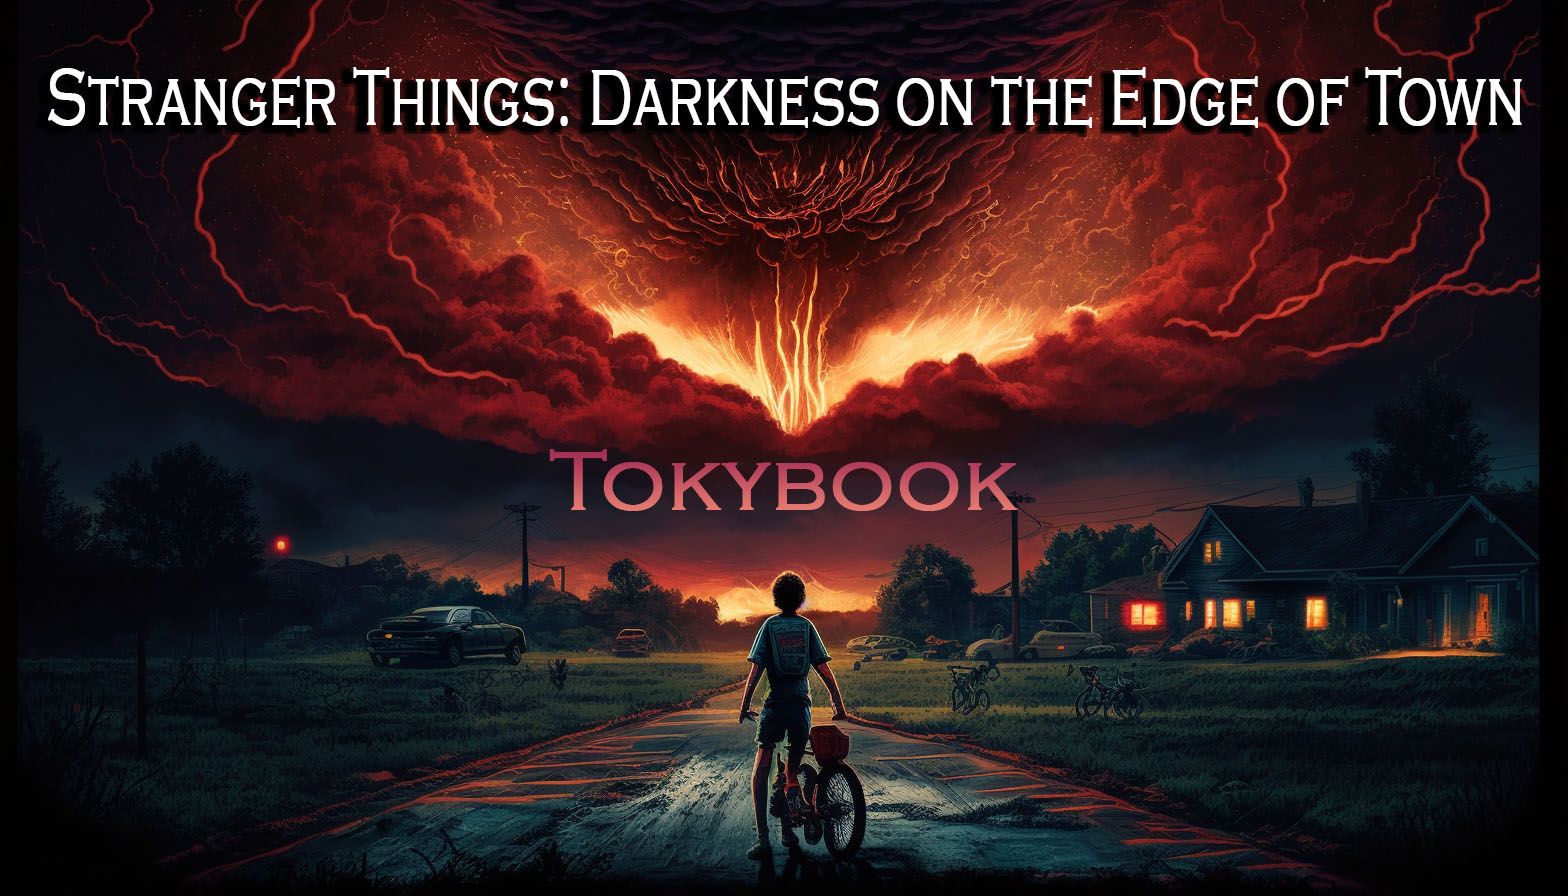 Stranger Things: Darkness on the Edge of Town audiobook - Stranger Things